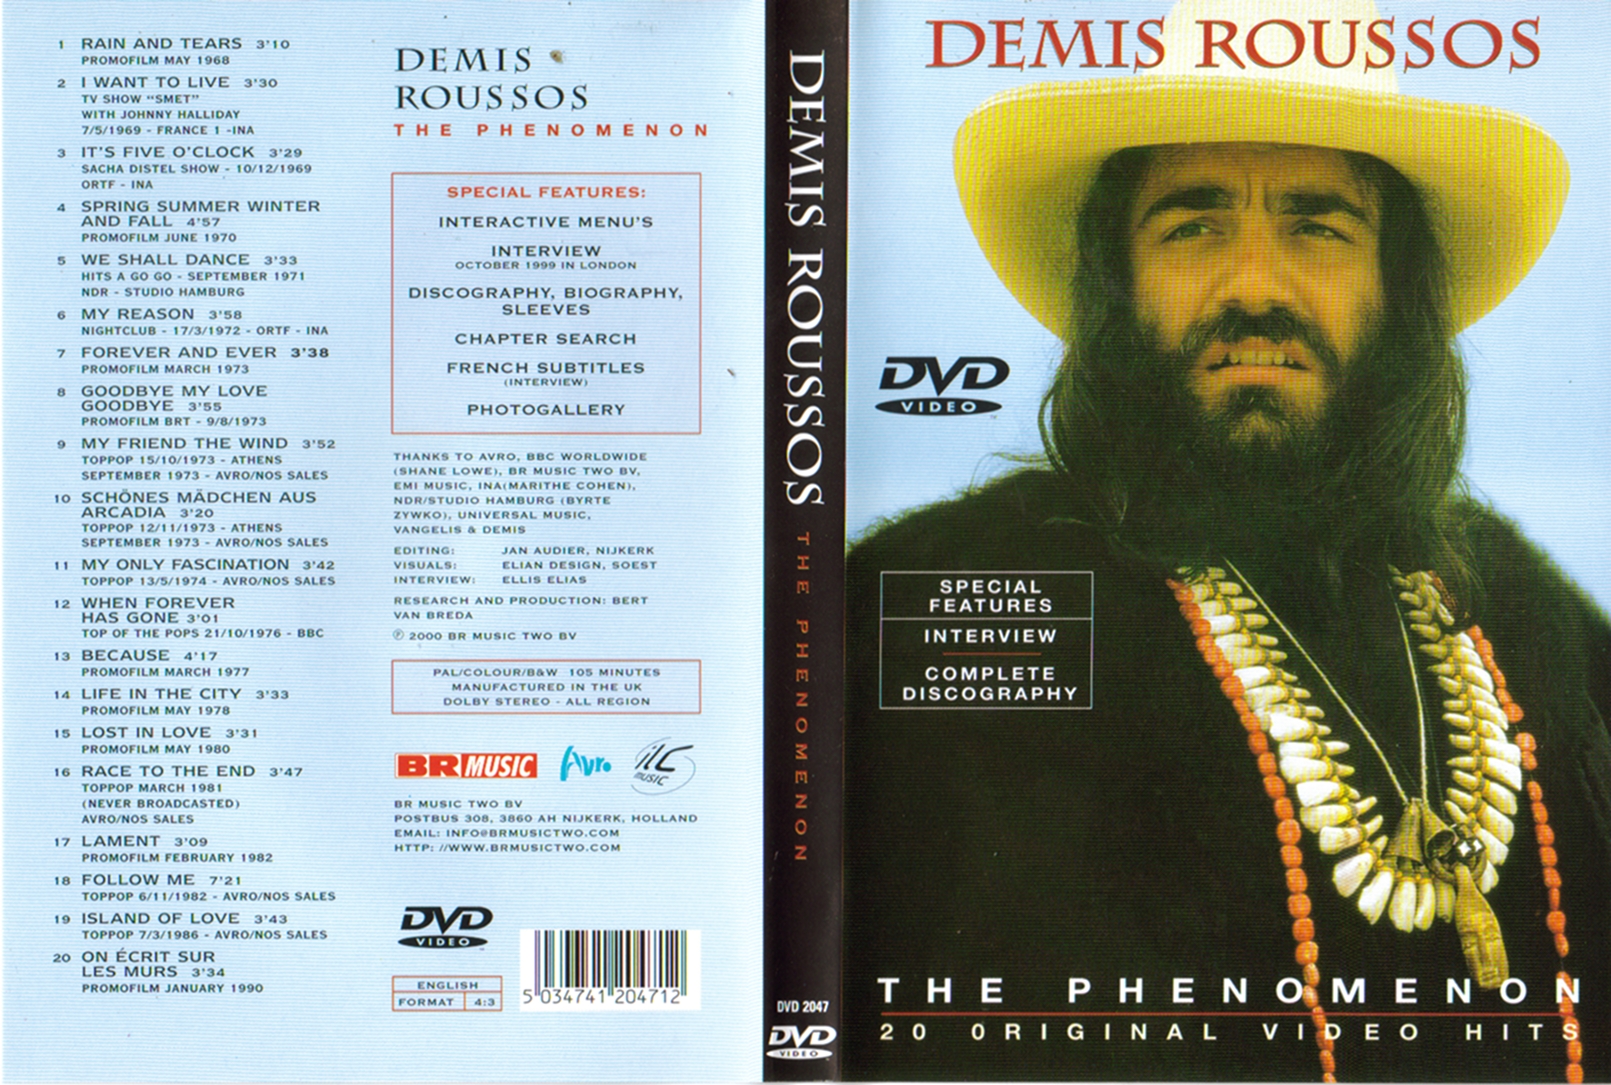 Jaquette DVD Demis Roussos - The phenomenon